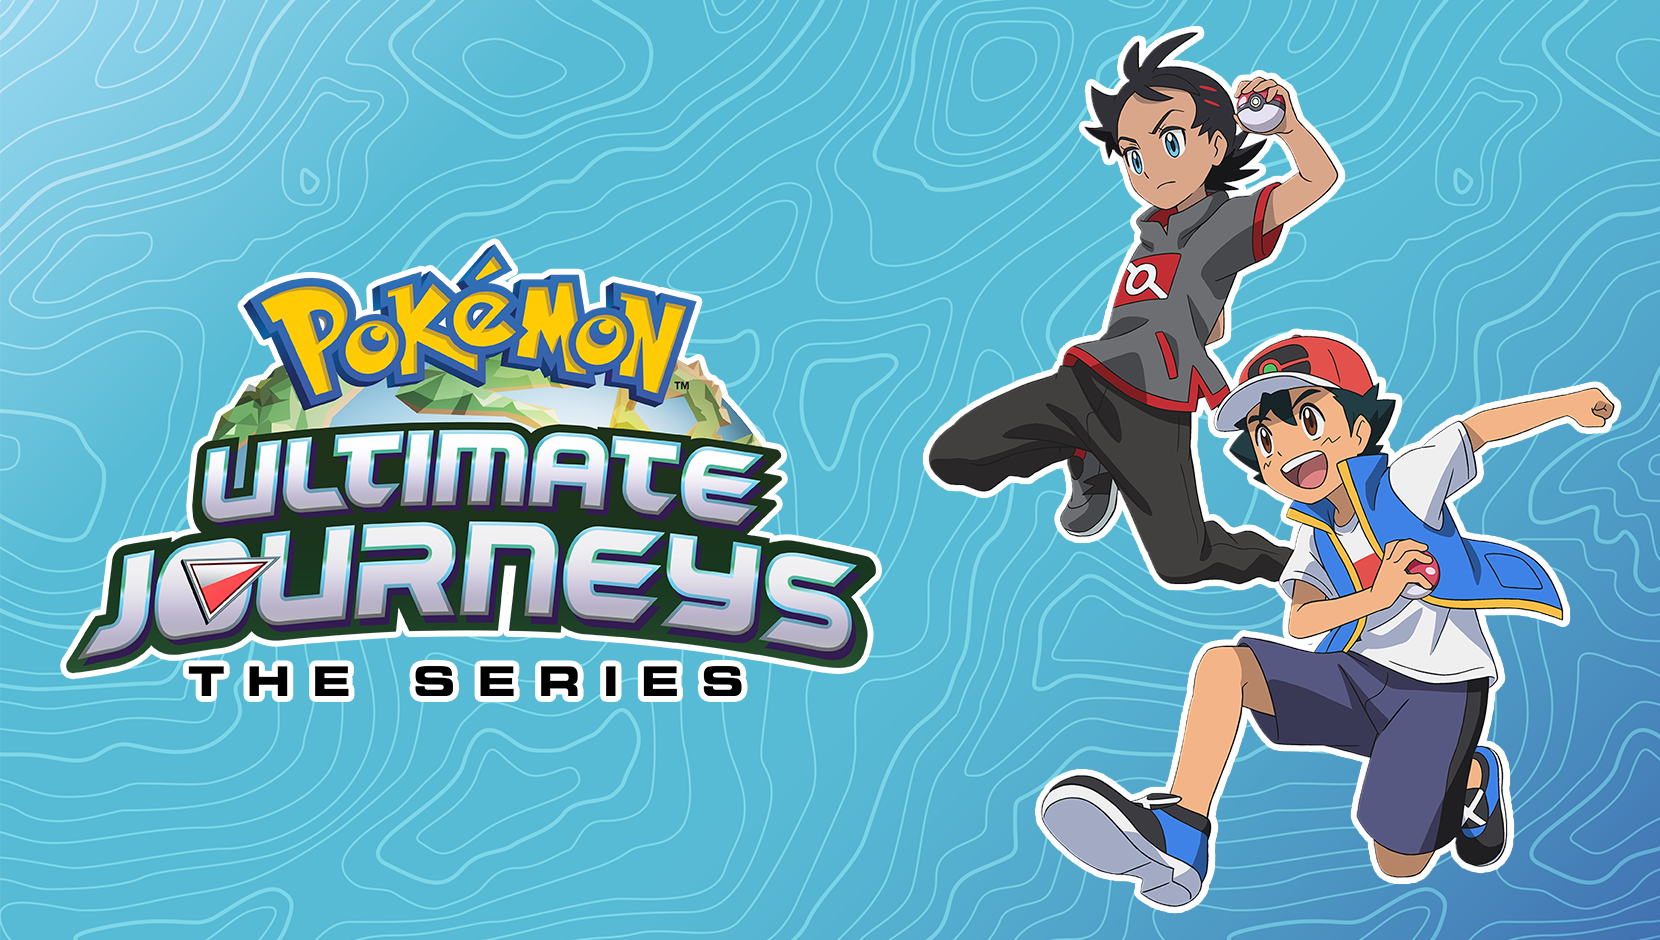 Watch Pokémon Ultimate Journeys: The Series